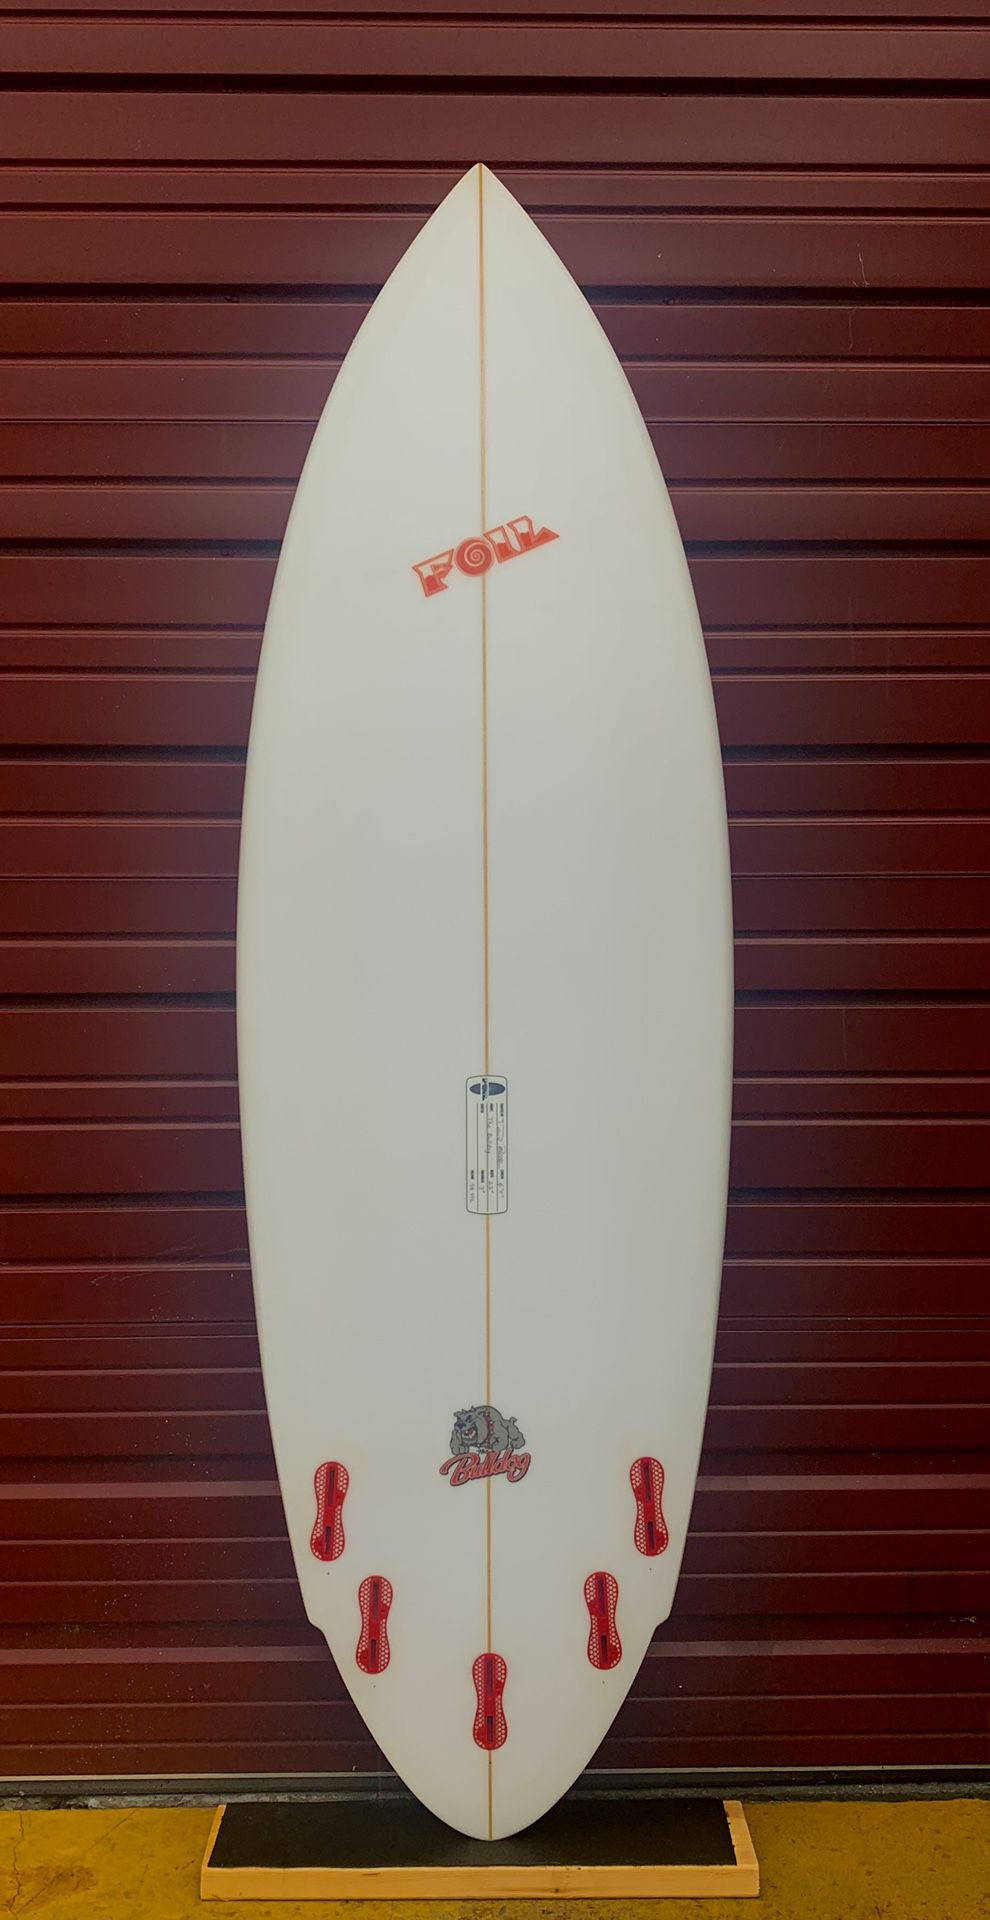 FOIL “The Bulldog” Model Short Board Surfboard